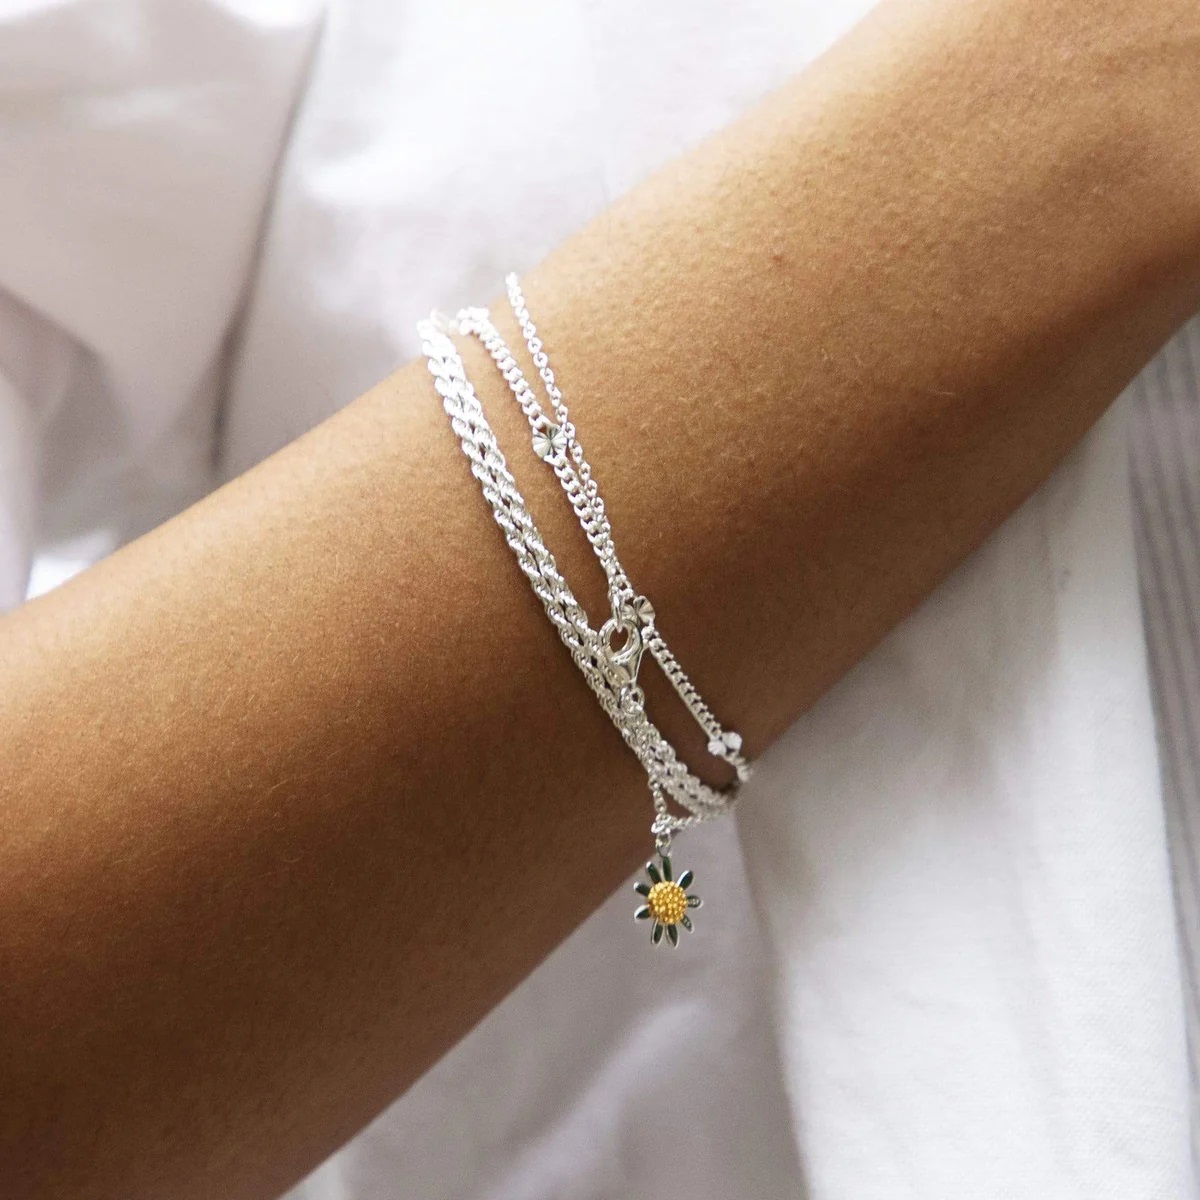 Daisy Estée Lalonde Sunburst Chain Bracelet - Silver - ELBR07_SLV